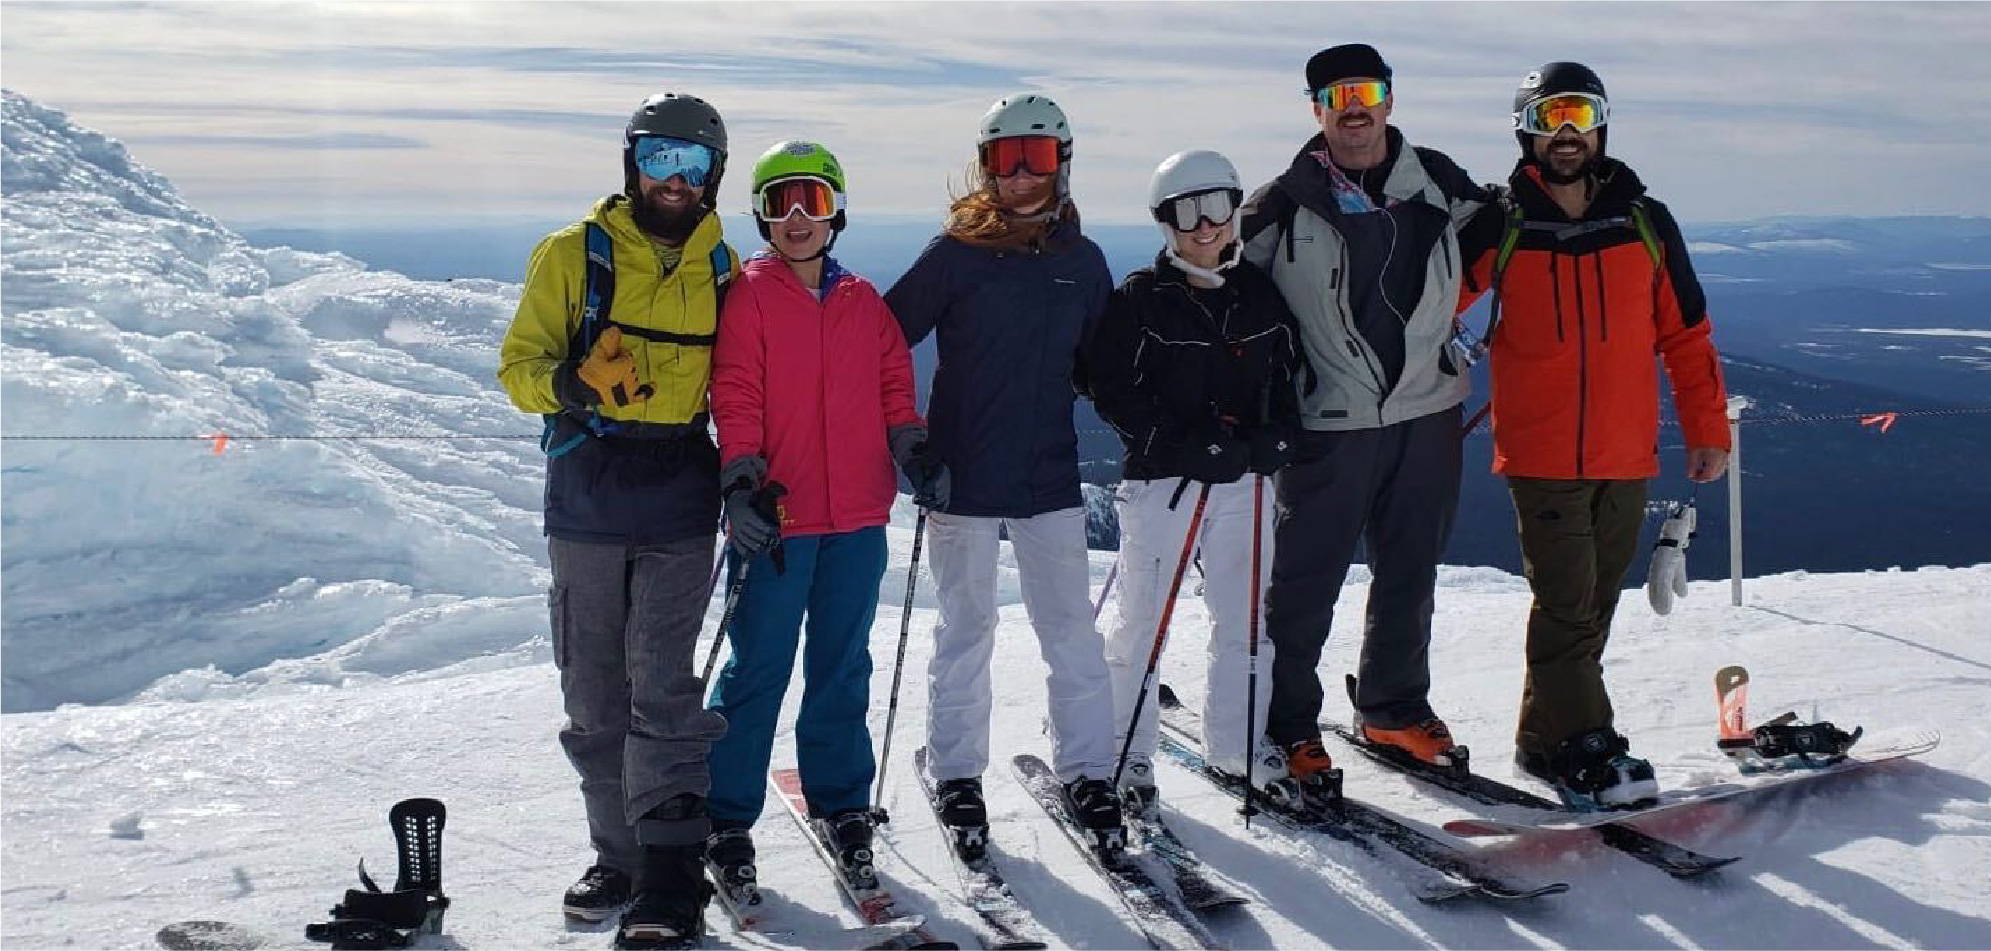 John Pinney and friends skiing at Mt. Hood